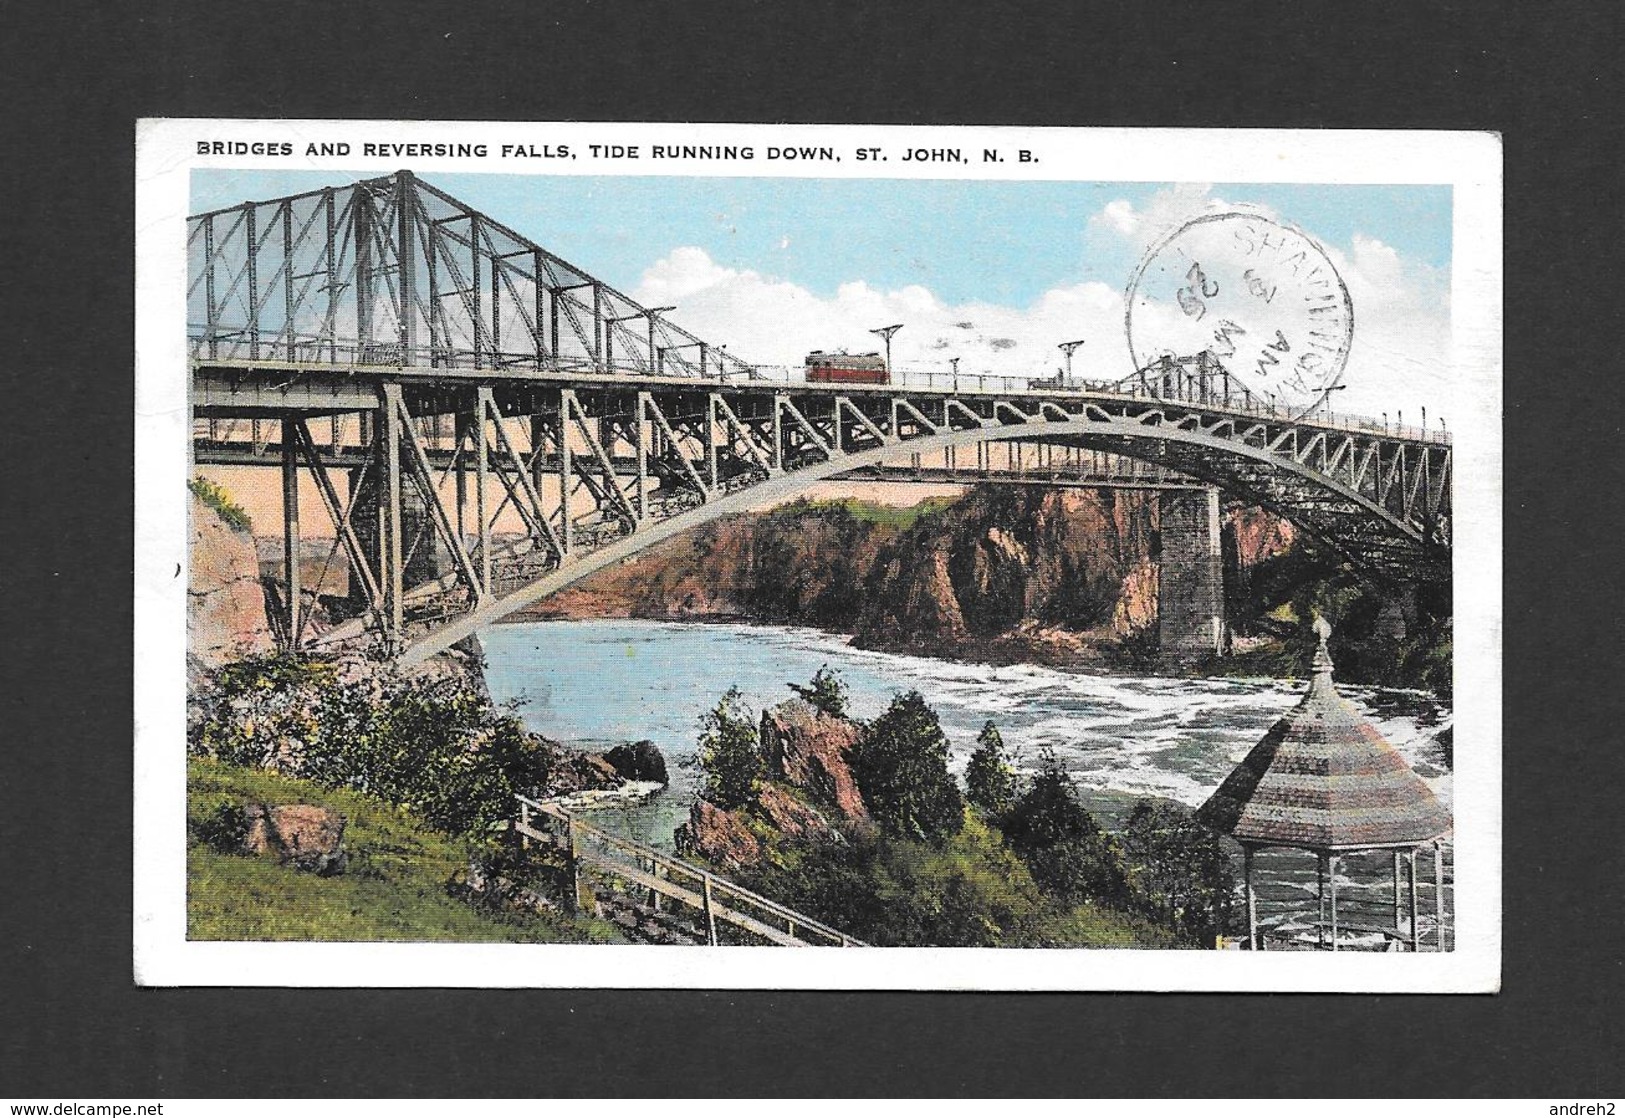 ST JOHN - NEW BRUNSWICK - BRIDGES AND REVERSING FALLS TIDE RUNNING DOWN - POSTMARKED 1925 - McMILLAN SERIES - St. John